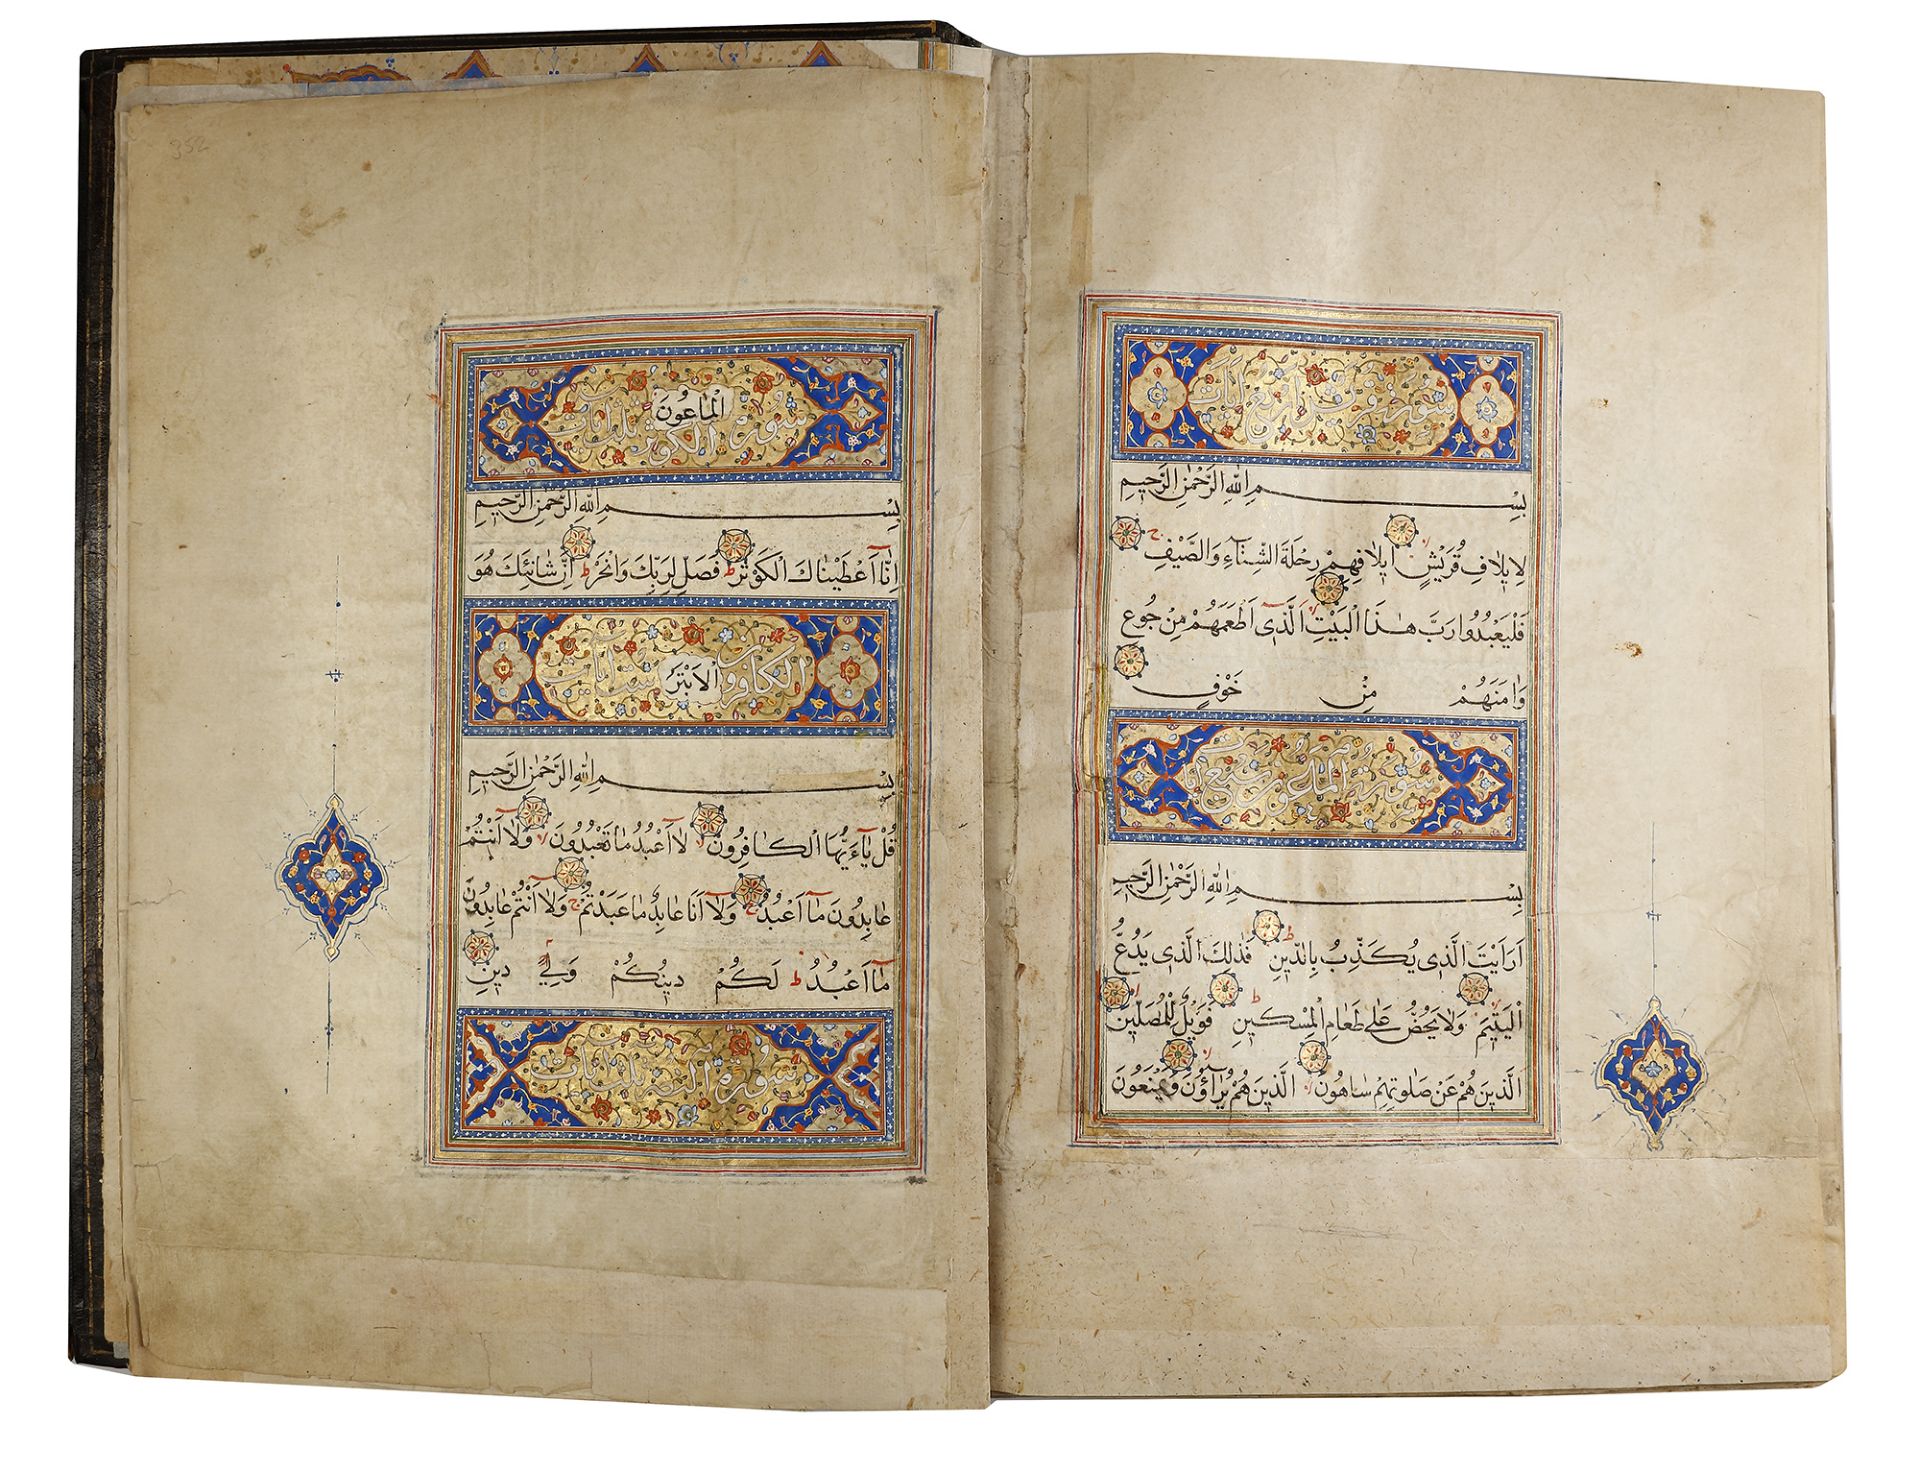 A LARGE ILLUMINATED QURAN, COPIED BY 'ALA'-AL-DIN MUHAMMAD AL-TABRIZI SAFAVID, PERSIA, 16TH CENT - Image 20 of 26